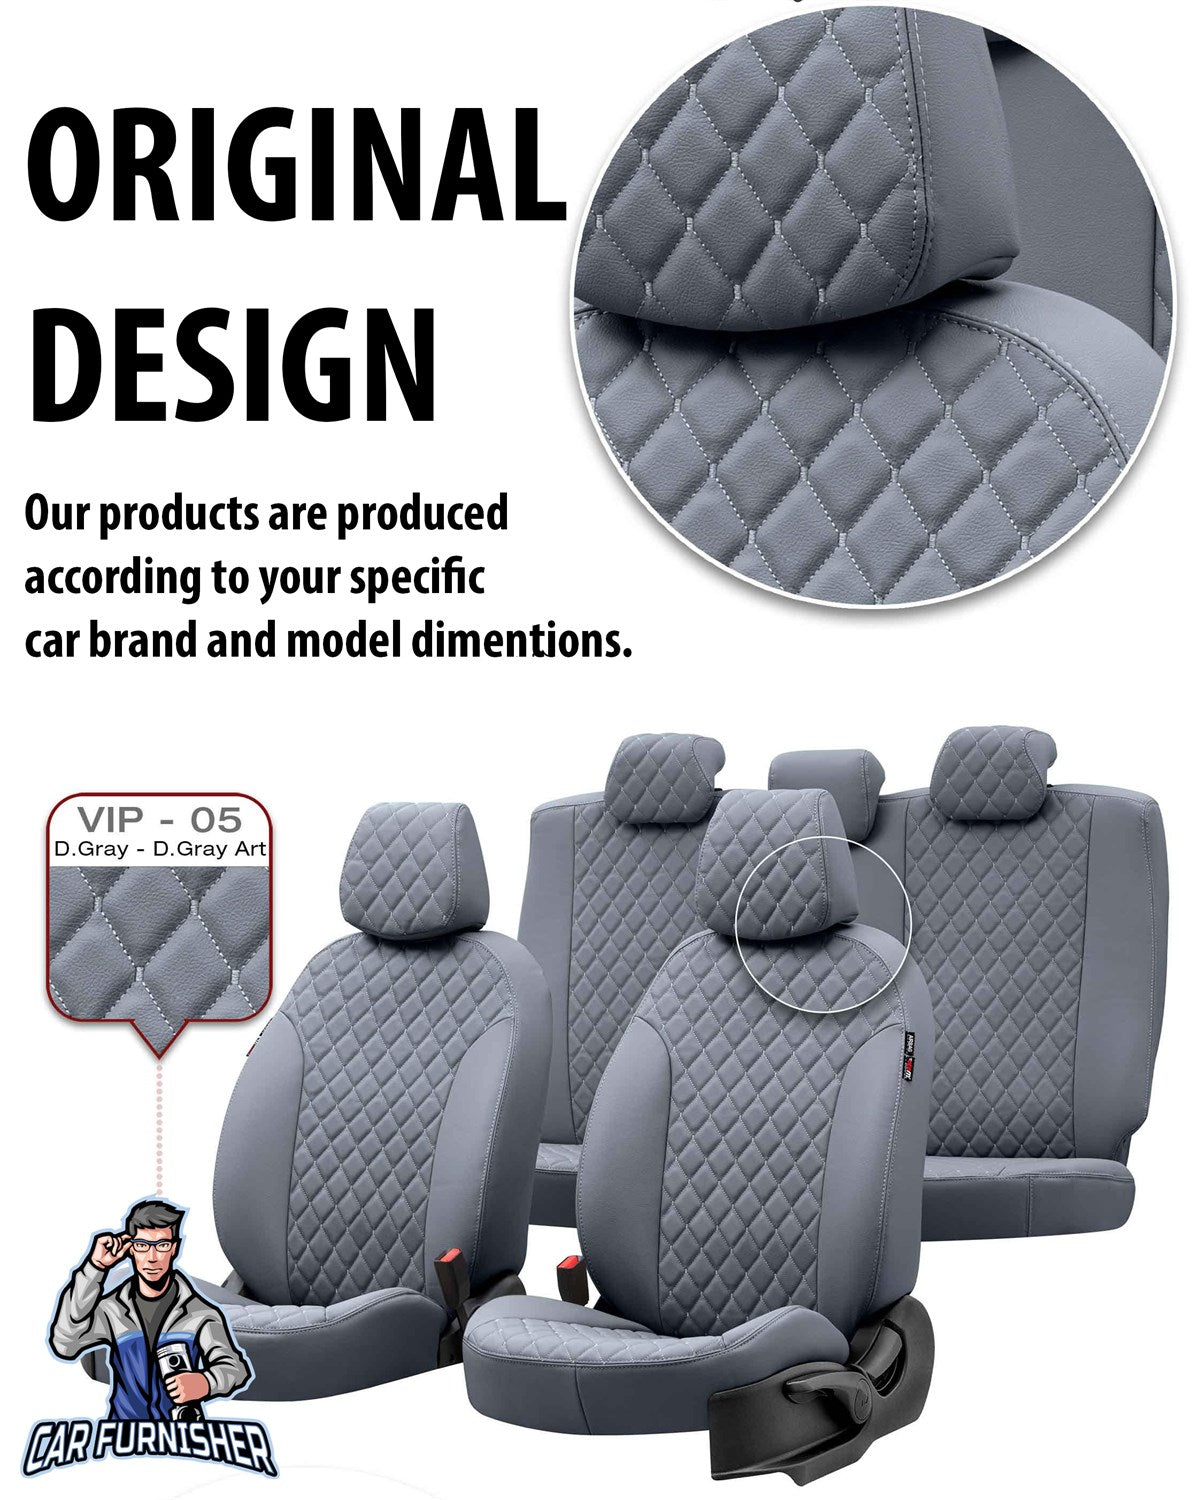 Kia Bongo Seat Covers Madrid Leather Design Dark Red Leather